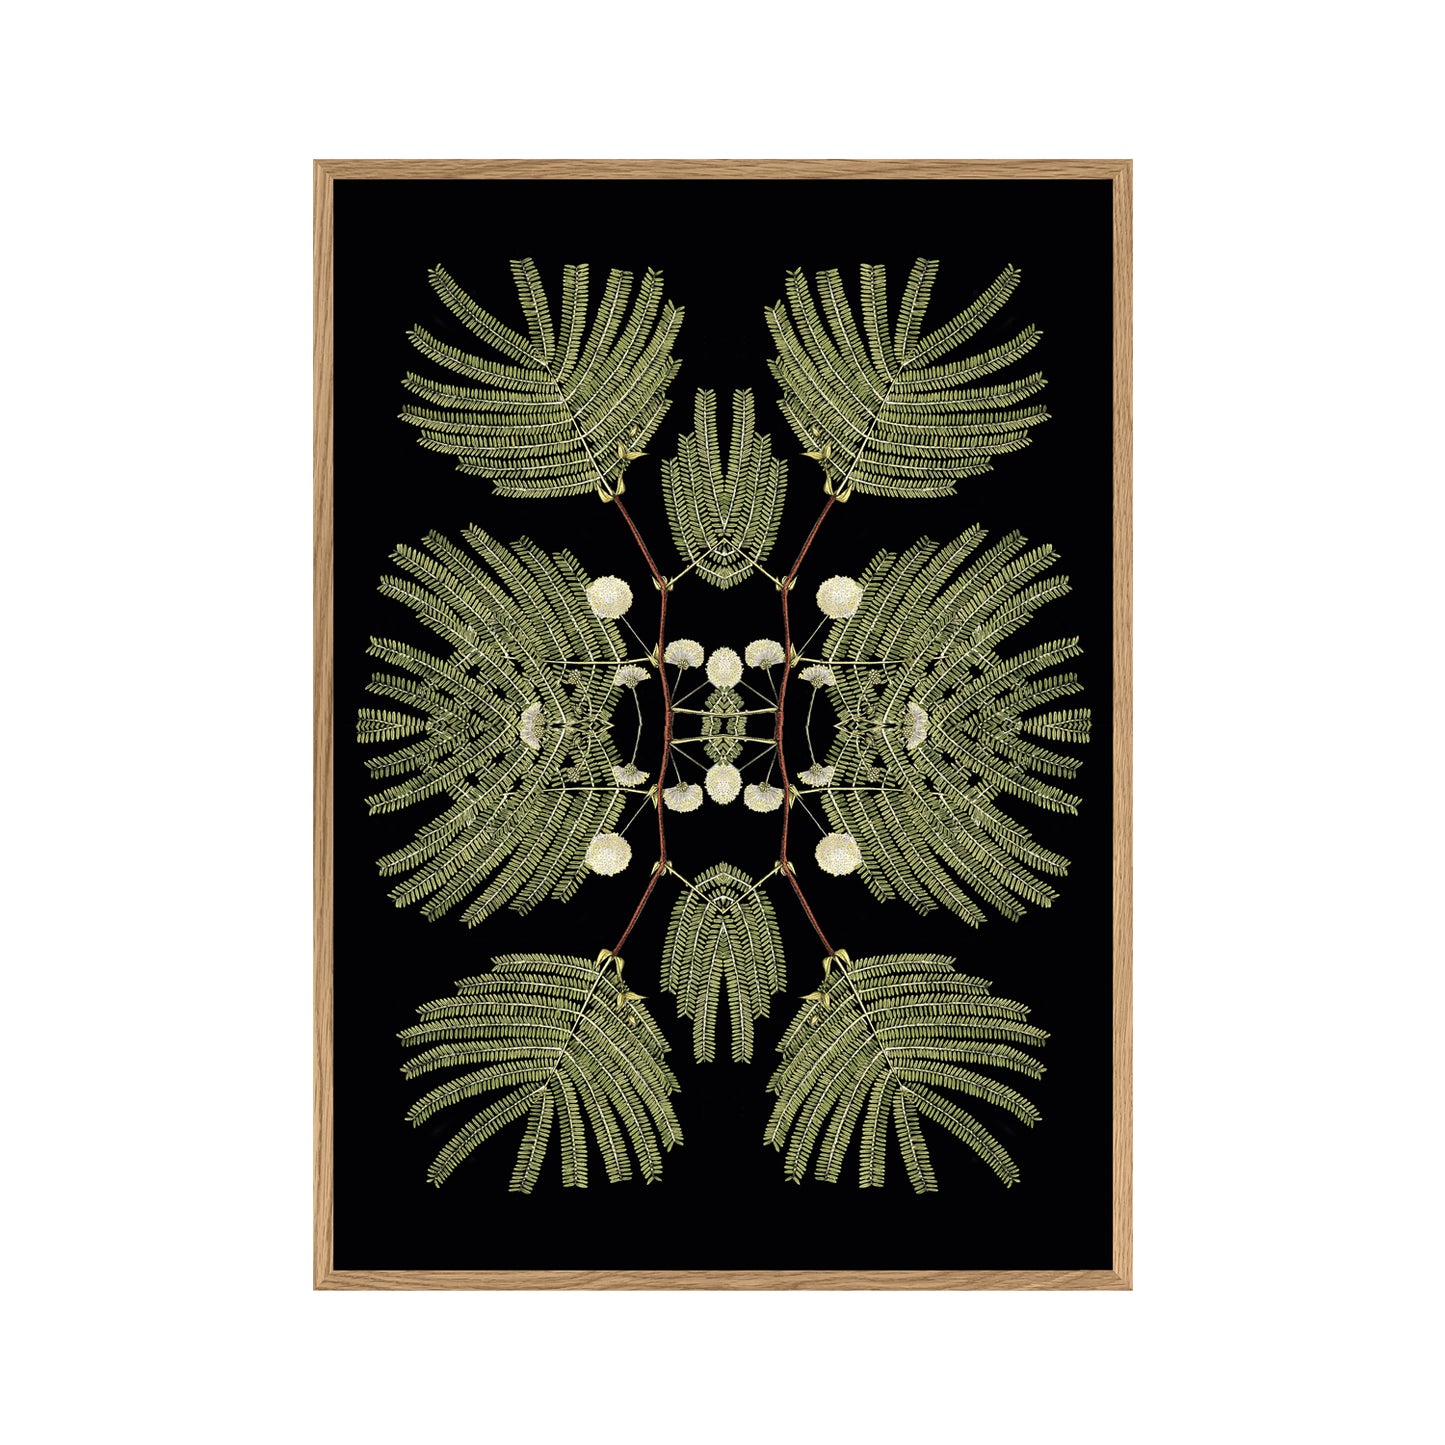 No. 8903 Botanical Reflection Ltd Edition - 30cm x 40cm with Oak Frame